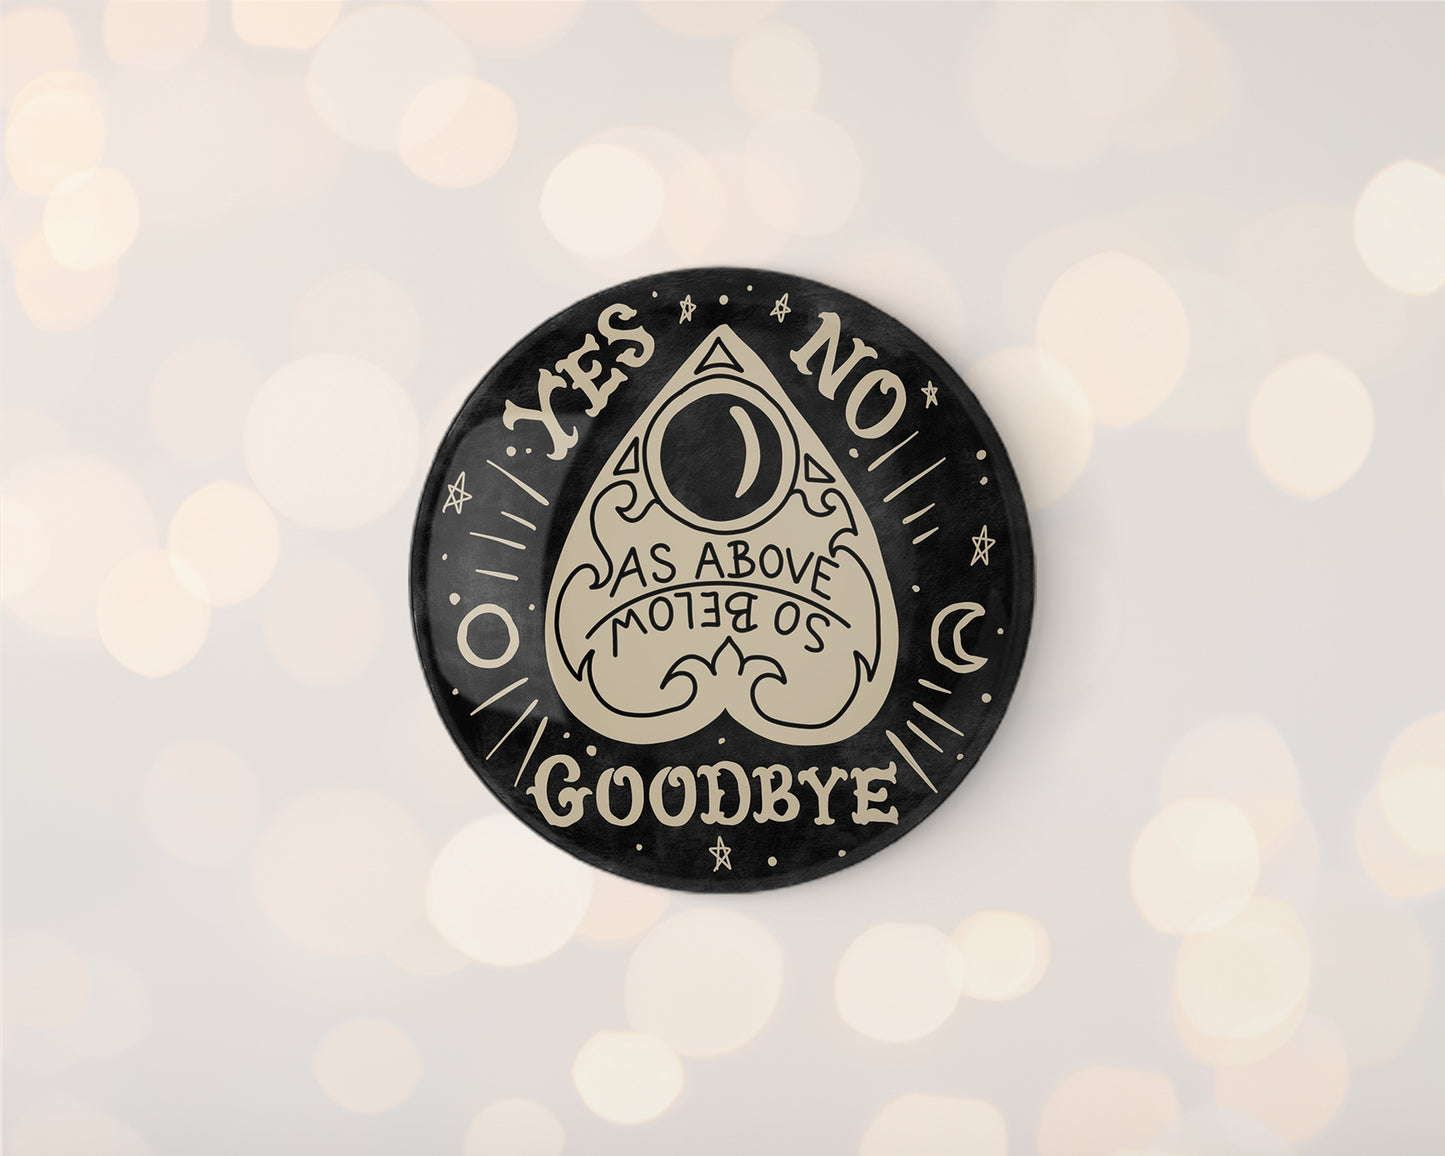 Ouija Design 32mm Badge